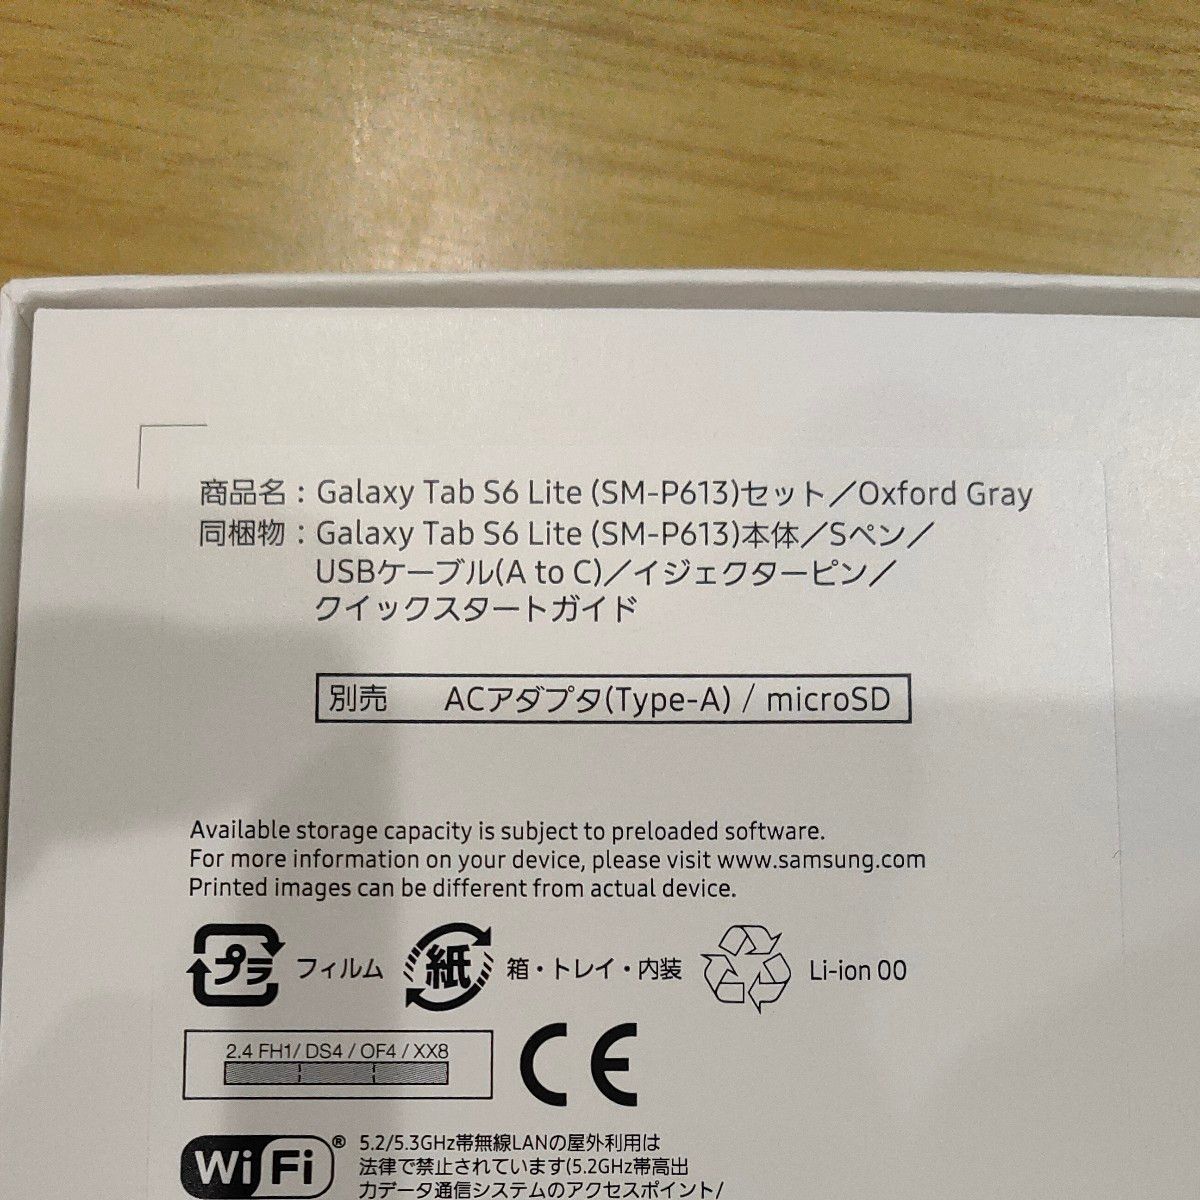 Samsung Galaxy Tab S6 Lite (Wi-Fi)